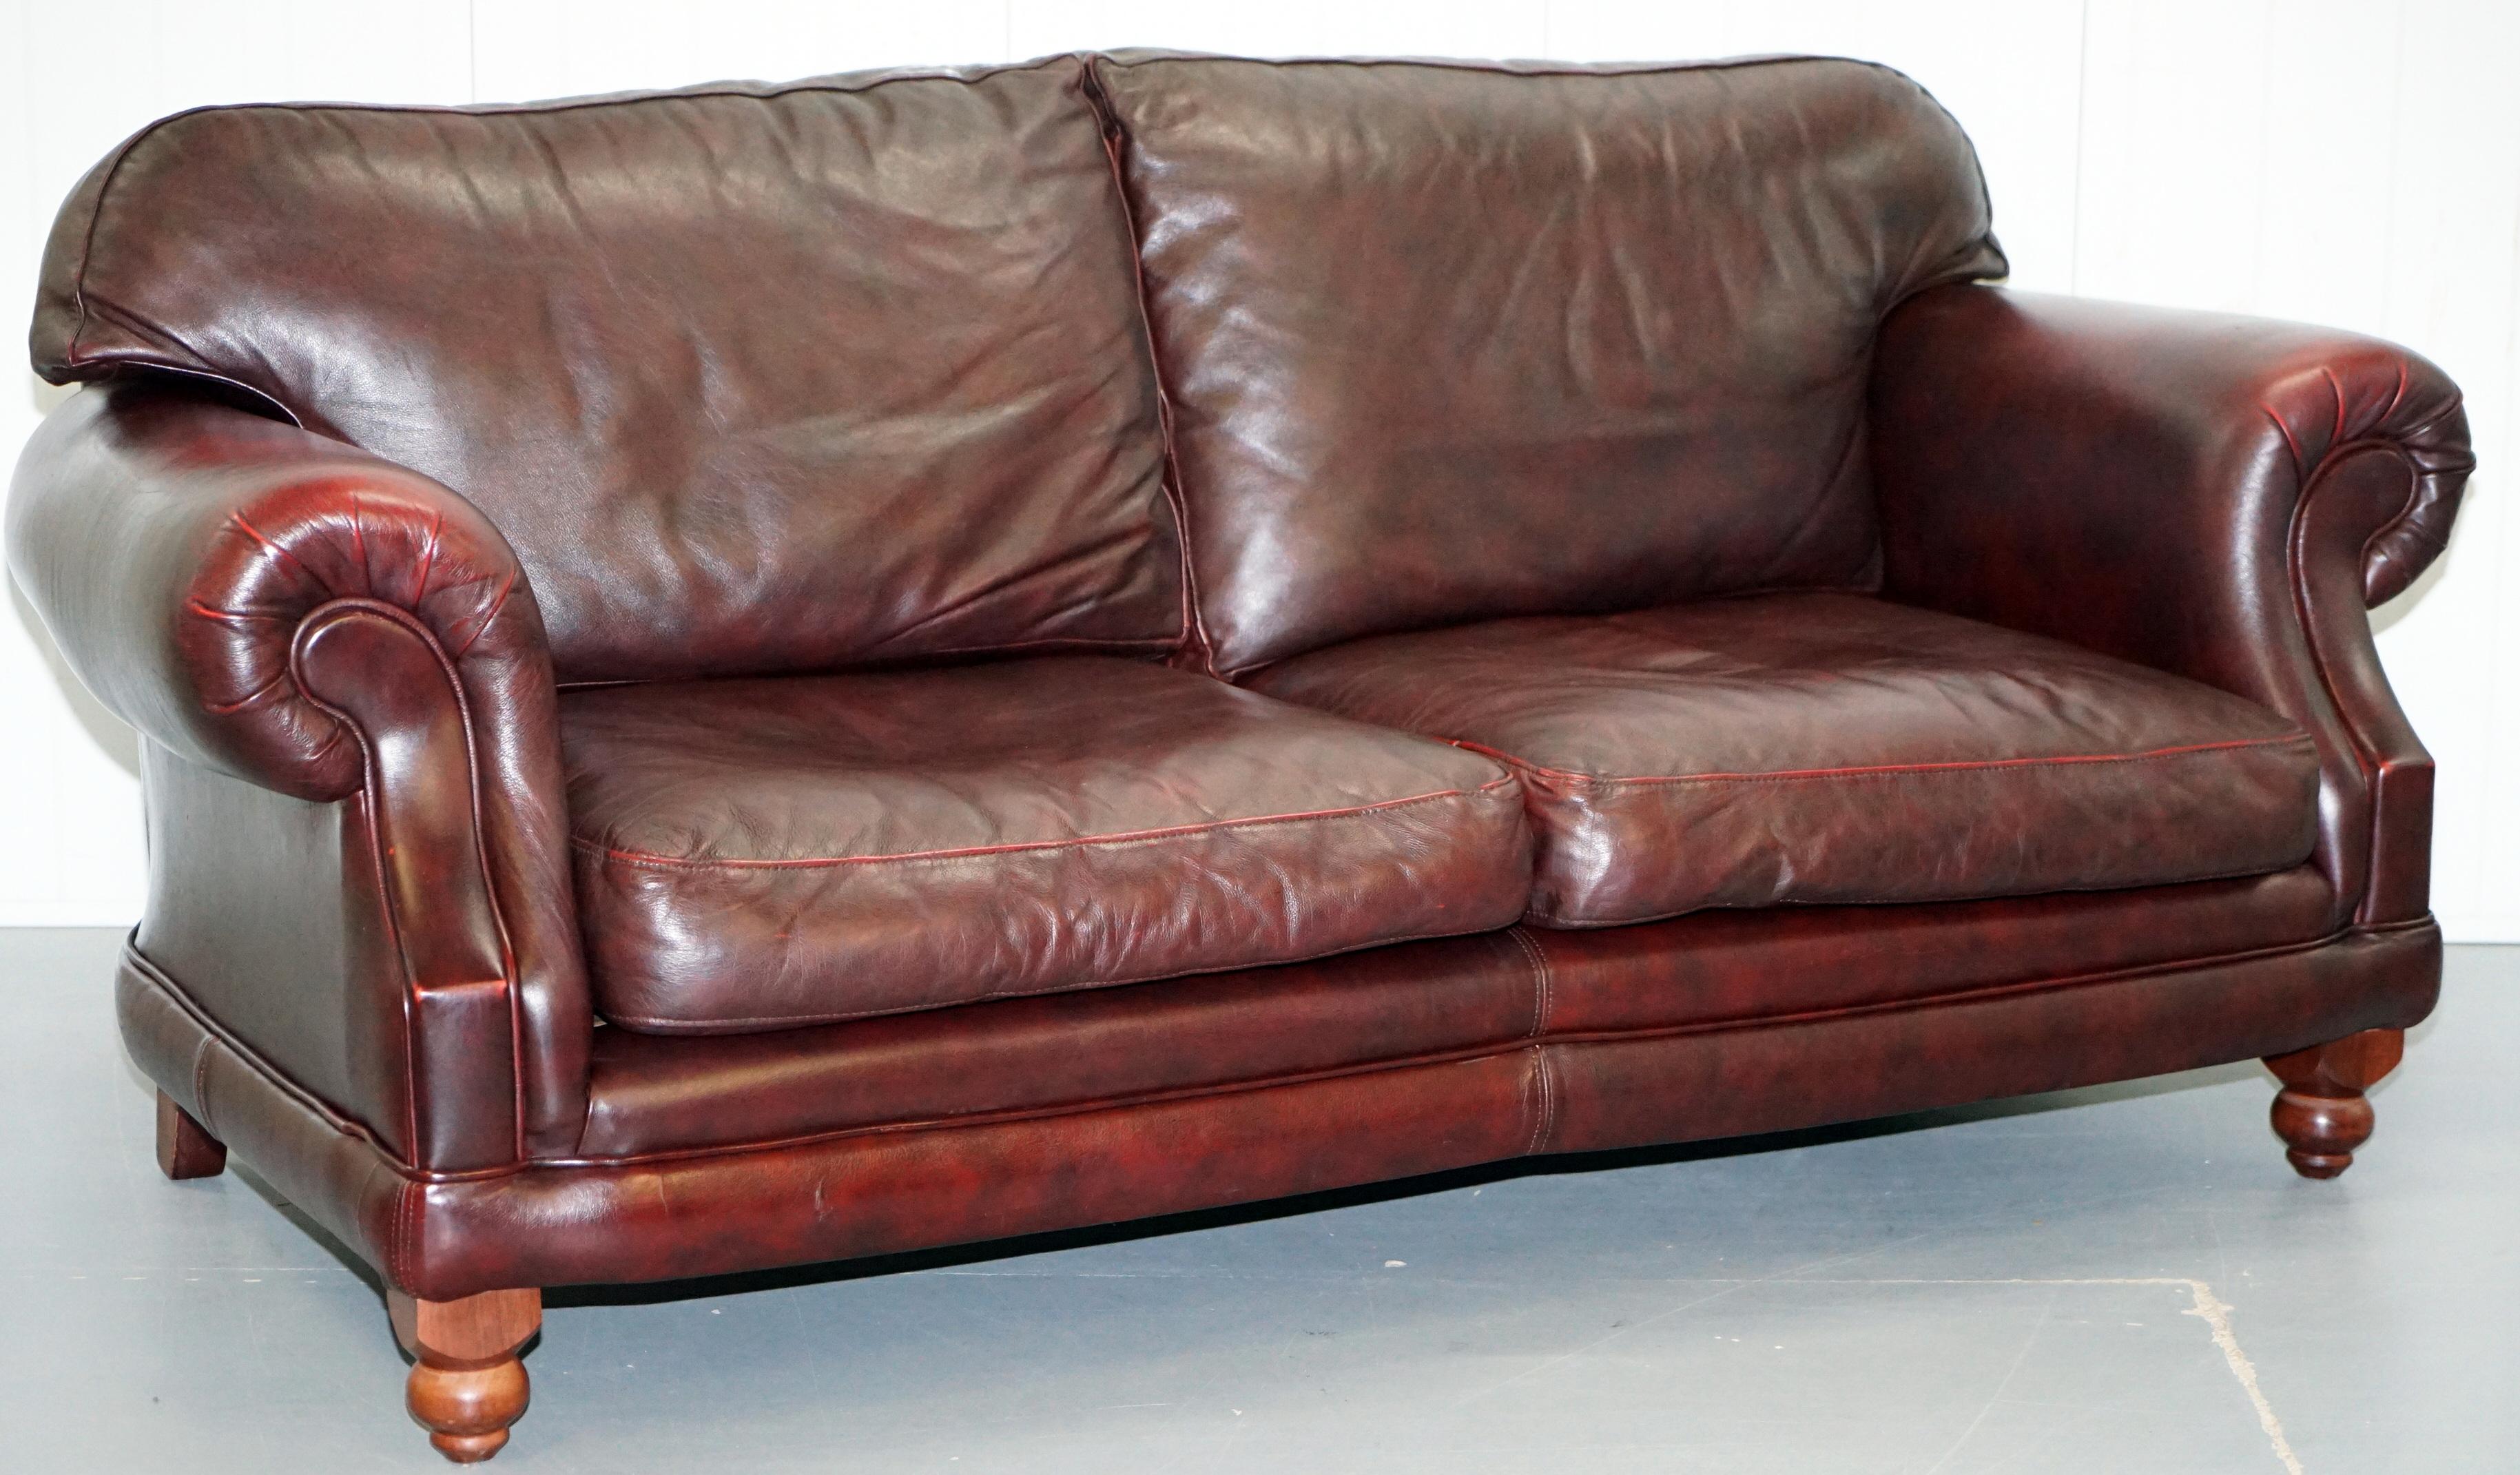 1 of 2 Thomas Lloyd Consort Oxblood Leather Three-Seat Sofas 2